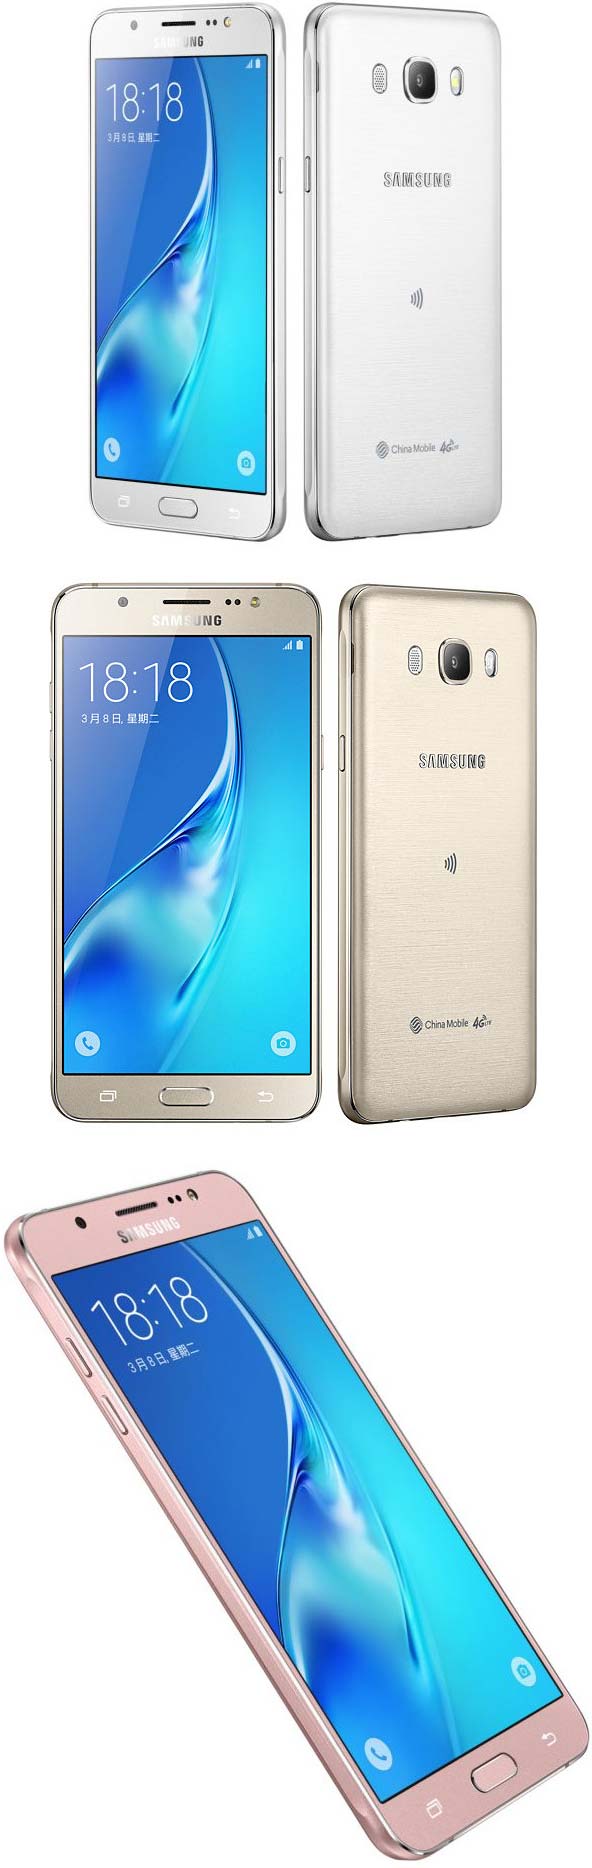 Умные телефоны Samsung Galaxy J5 (2016) and Galaxy J7 (2016)